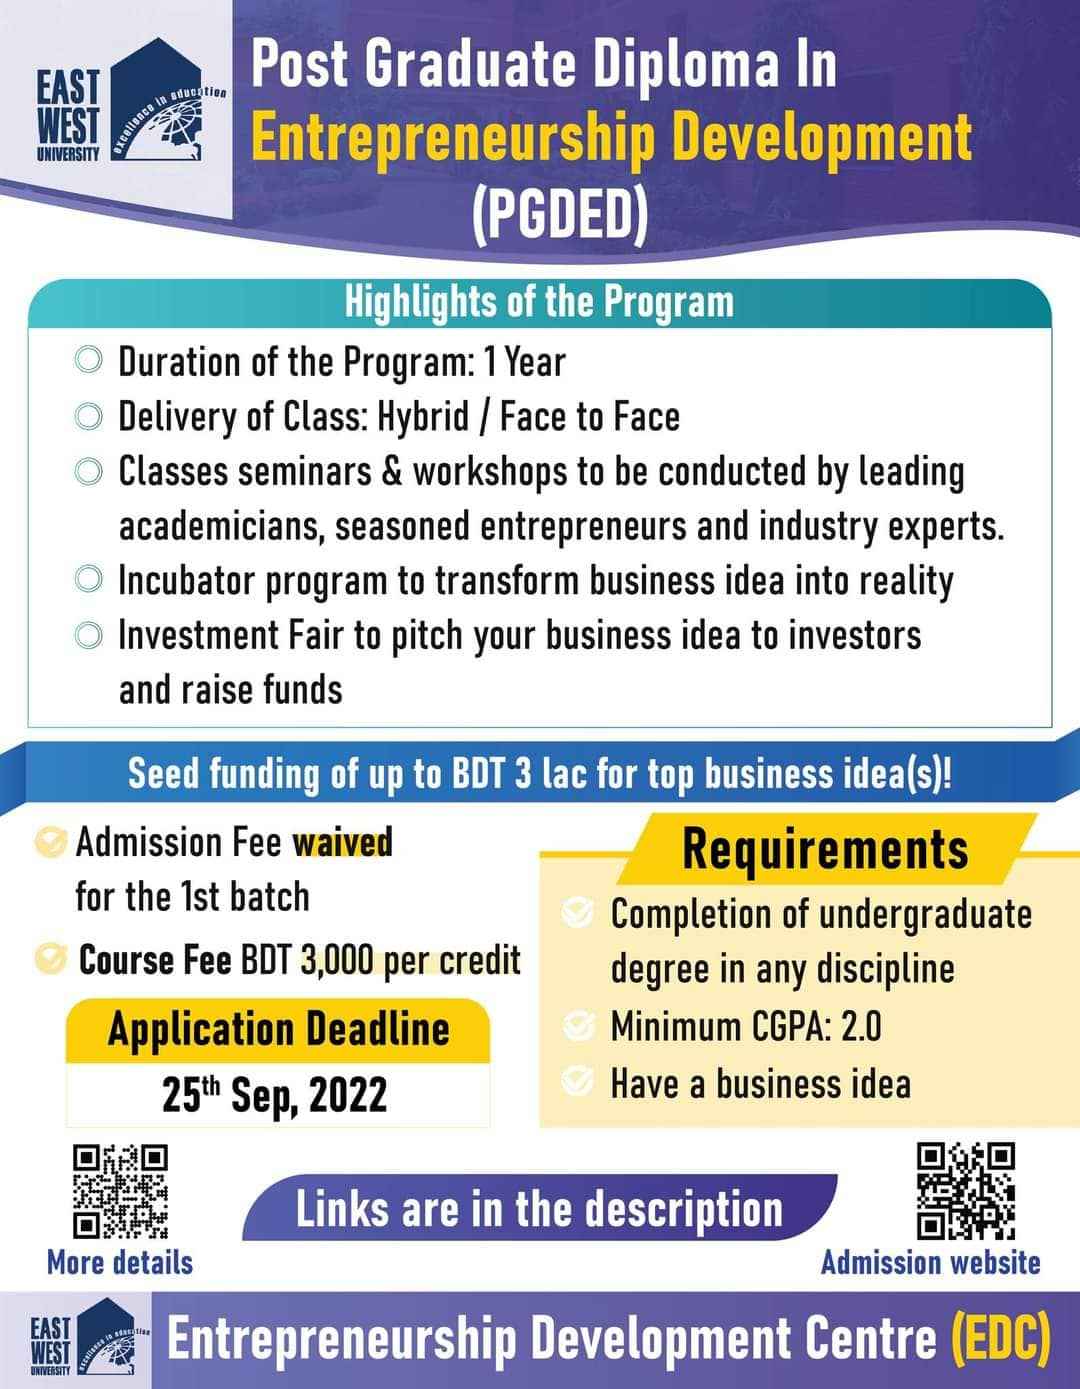 Post Graduate Diploma in Entrepreneurship Development (PGDED)